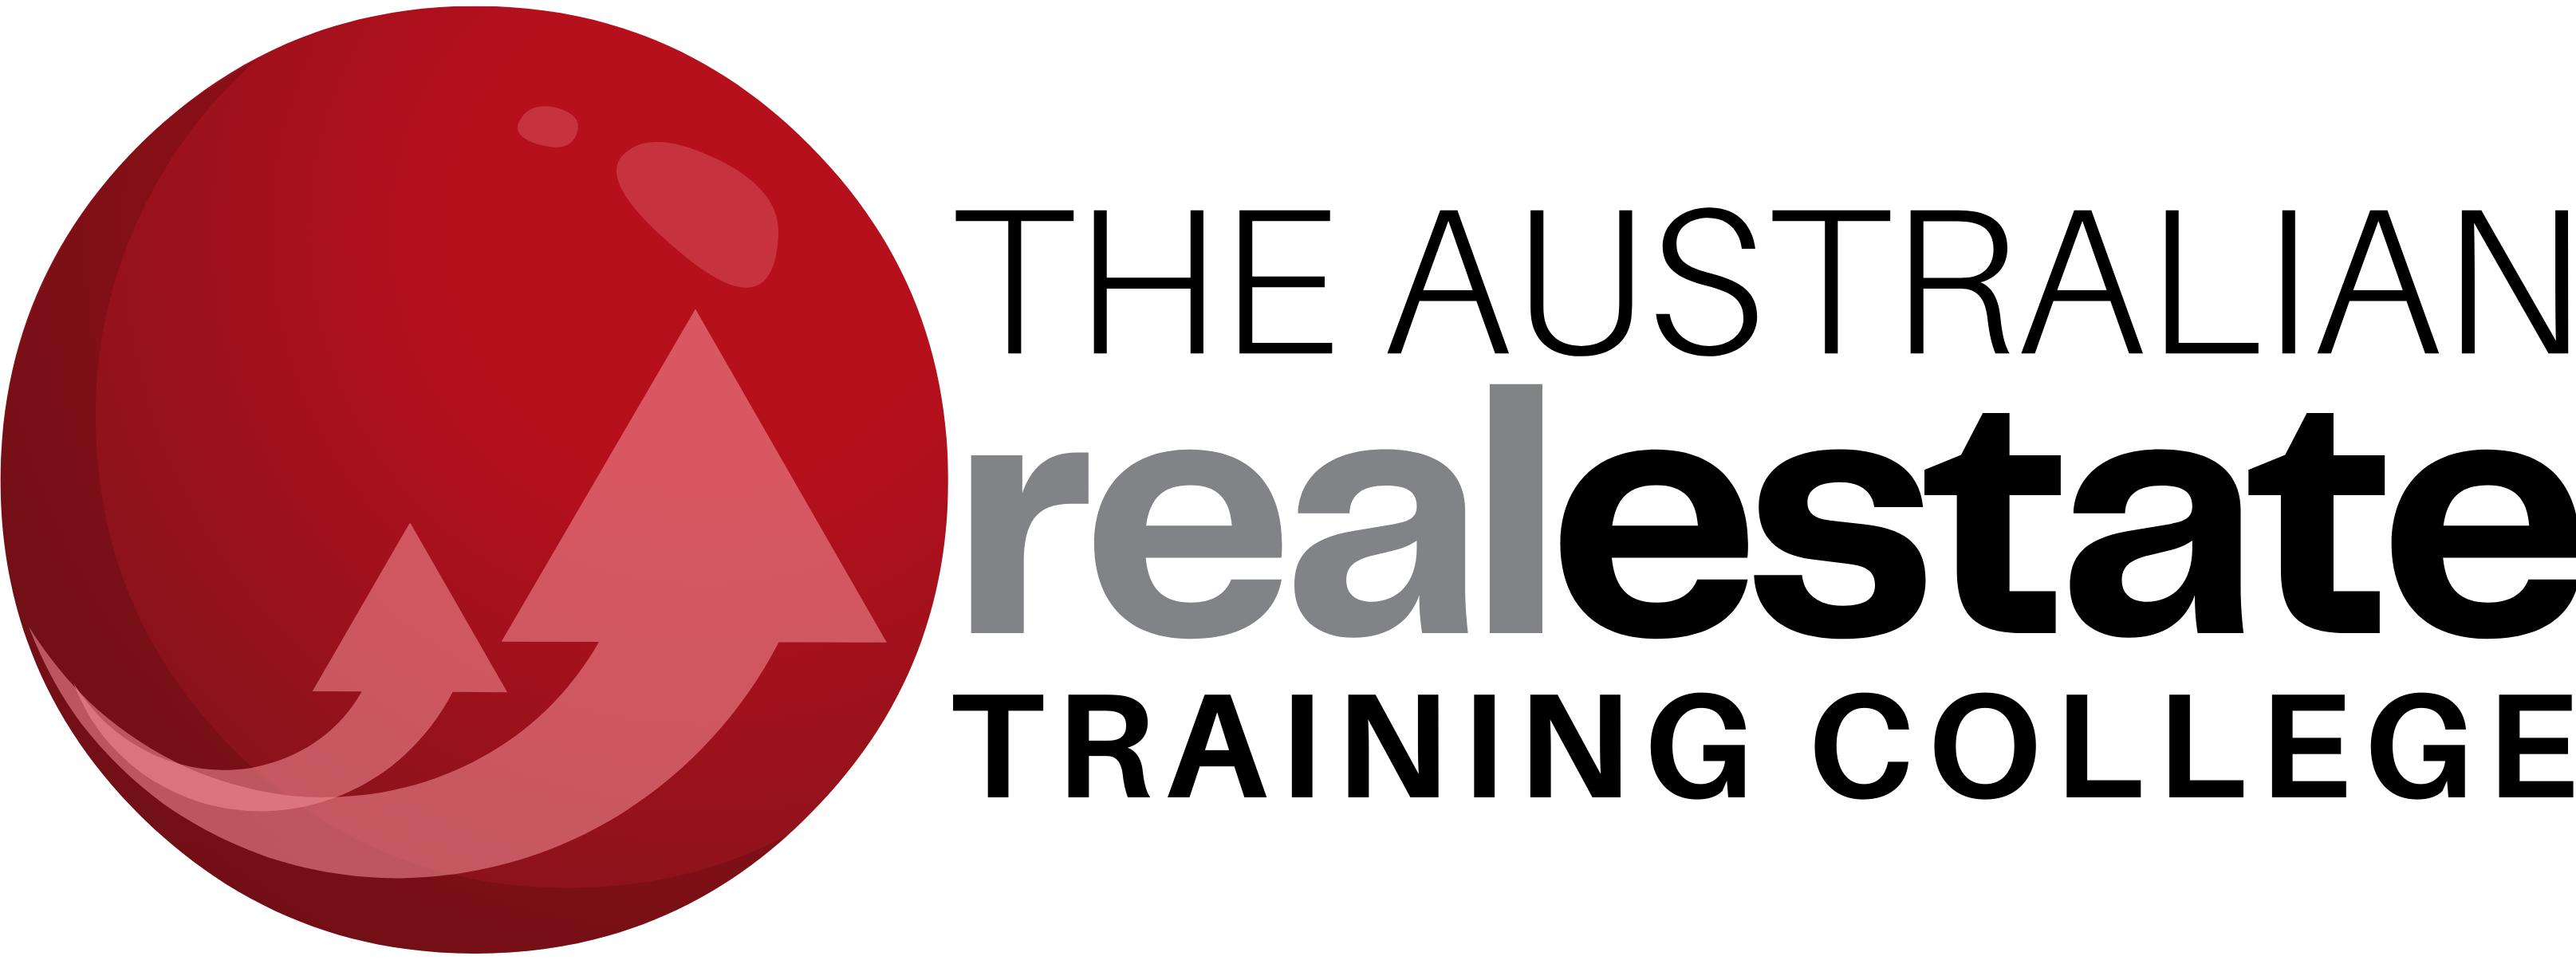 'The Australian Real Estate Training College' logo